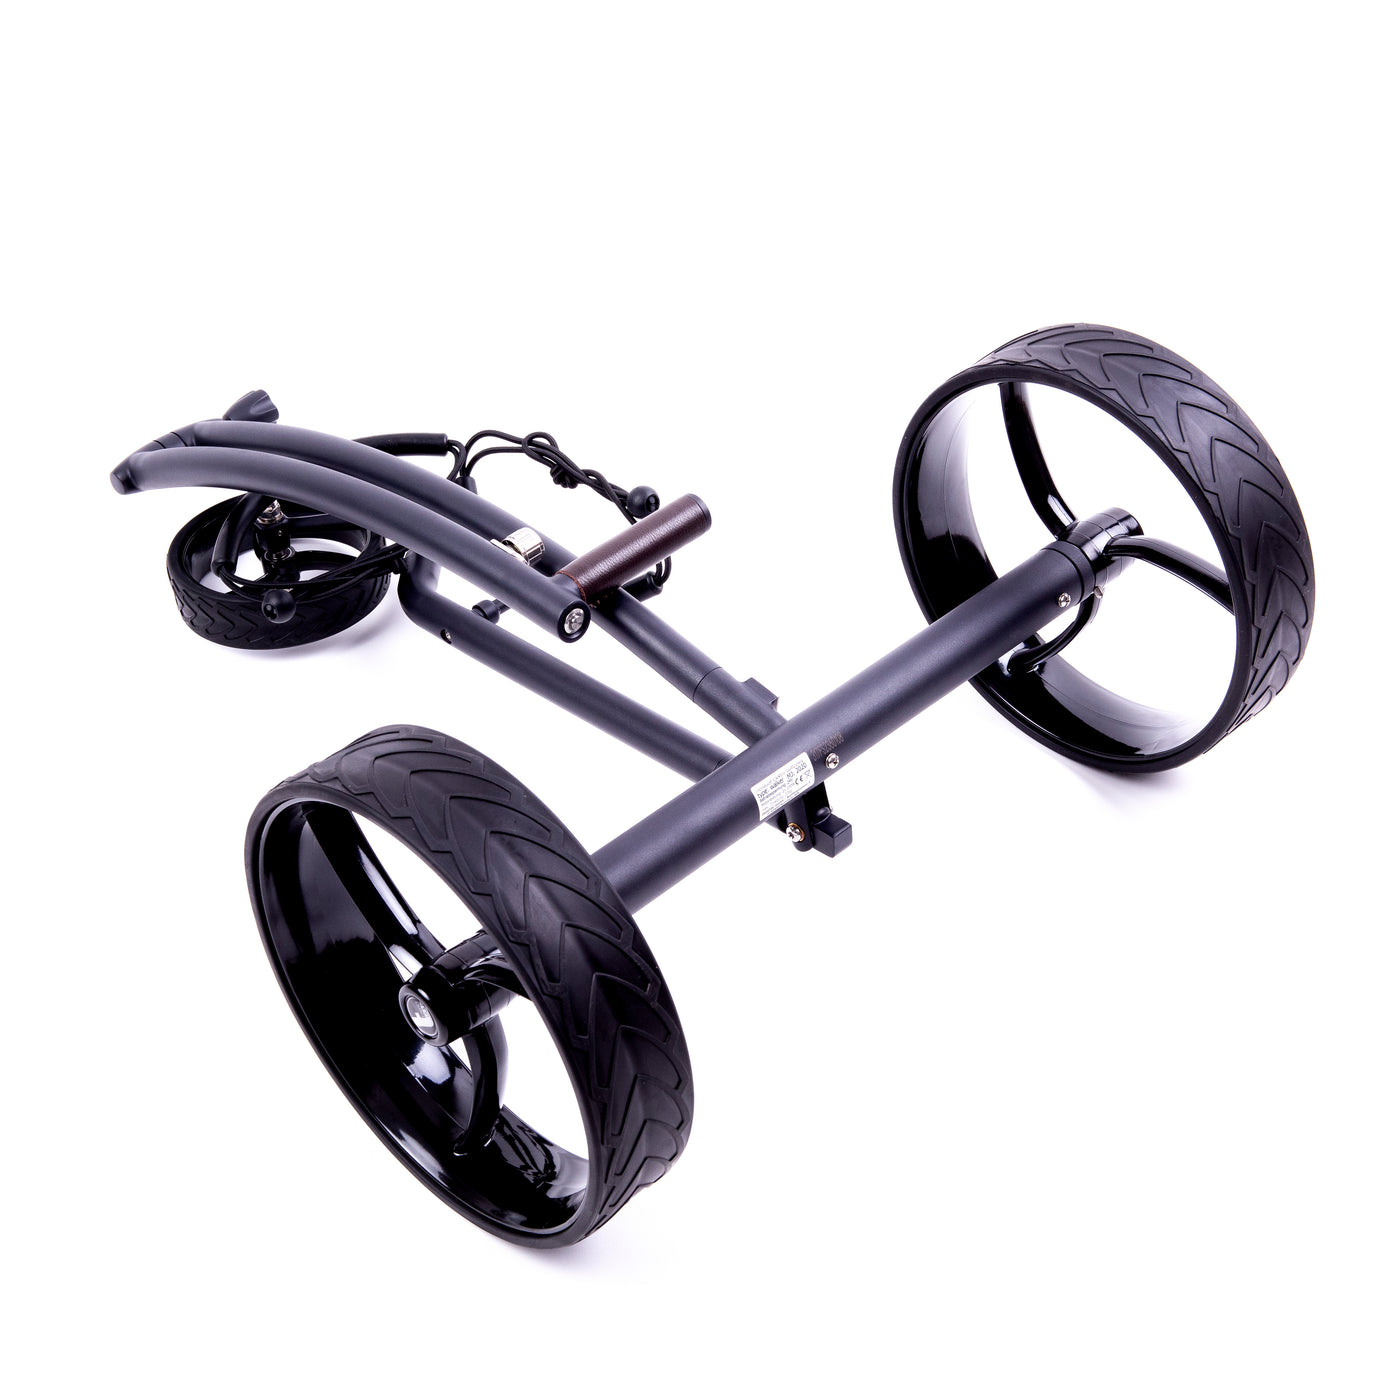 Trendgolf electric trolley walker model 2023 stainless steel, black